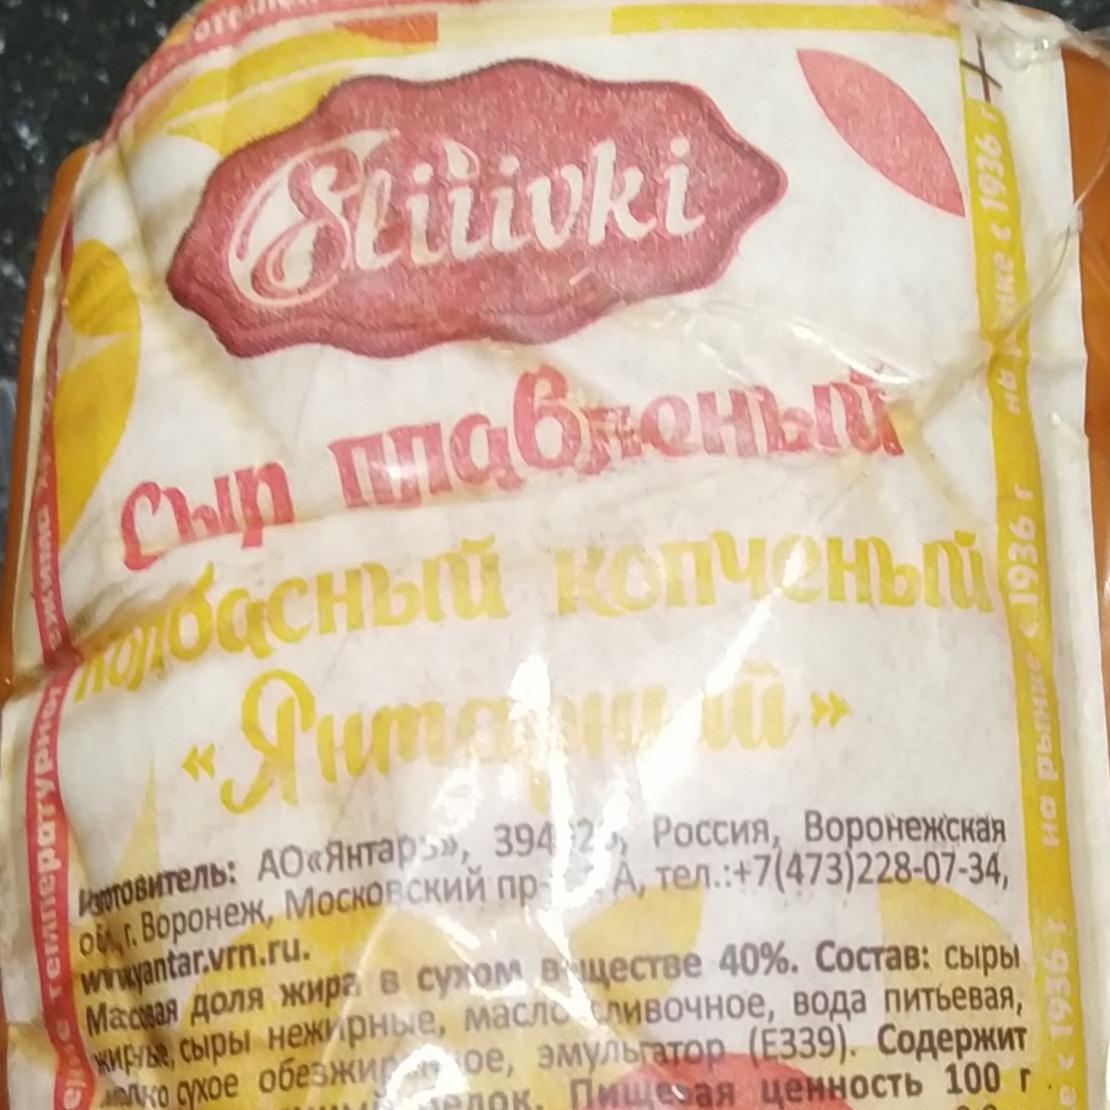 Фото - сыр колбасный Sliivki